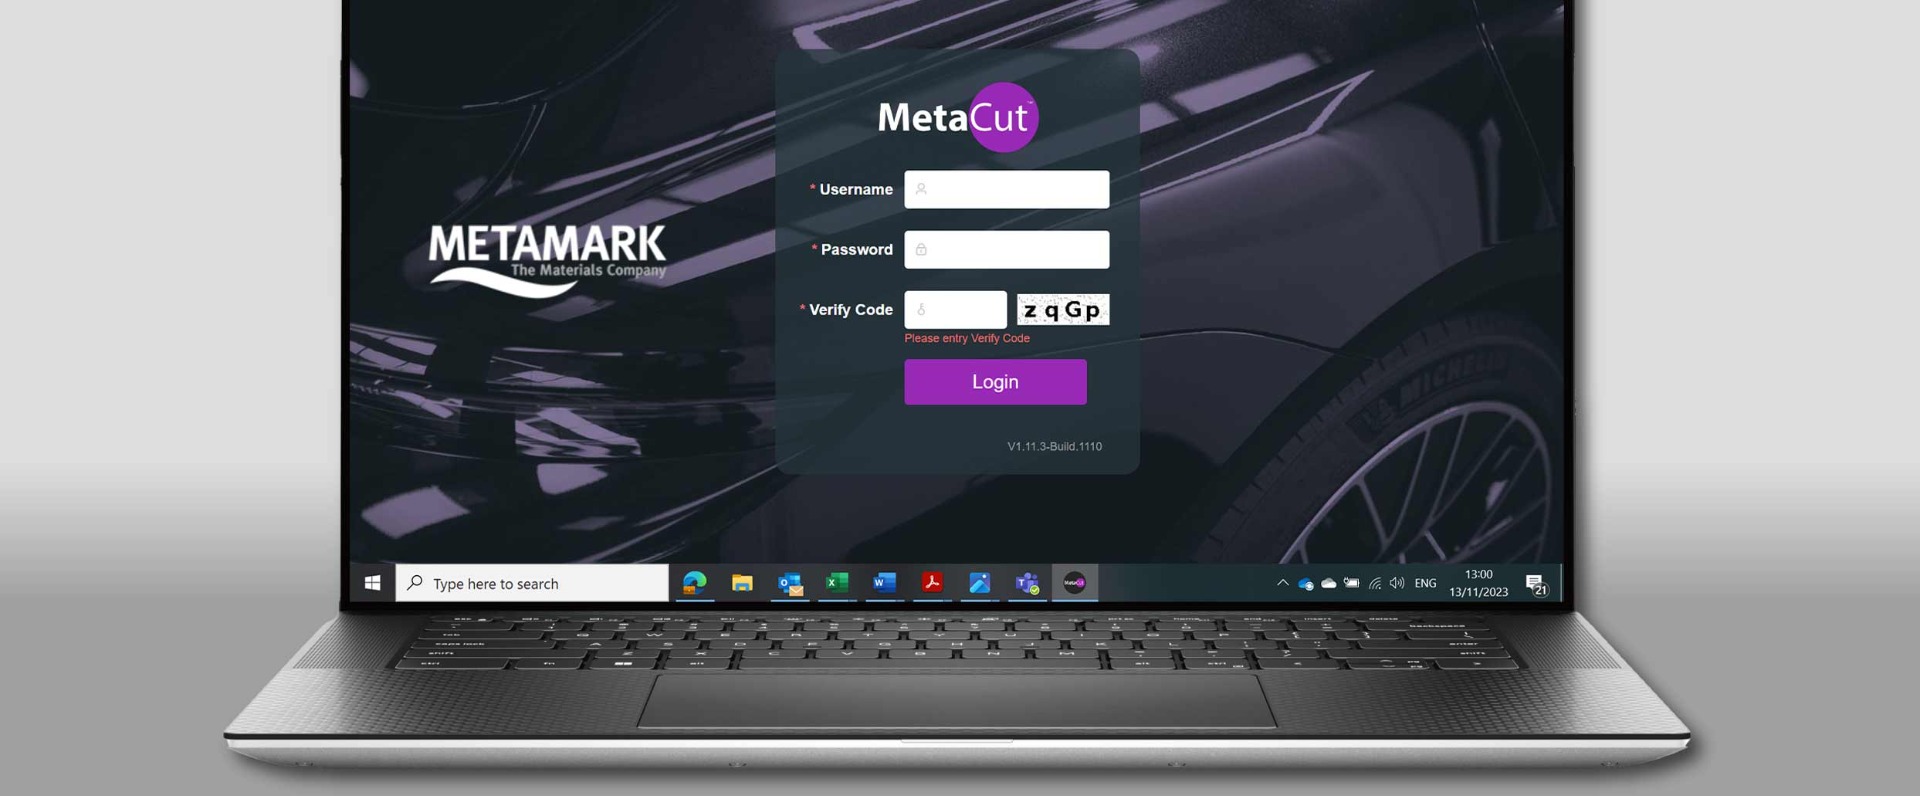 metacut-software-laptop